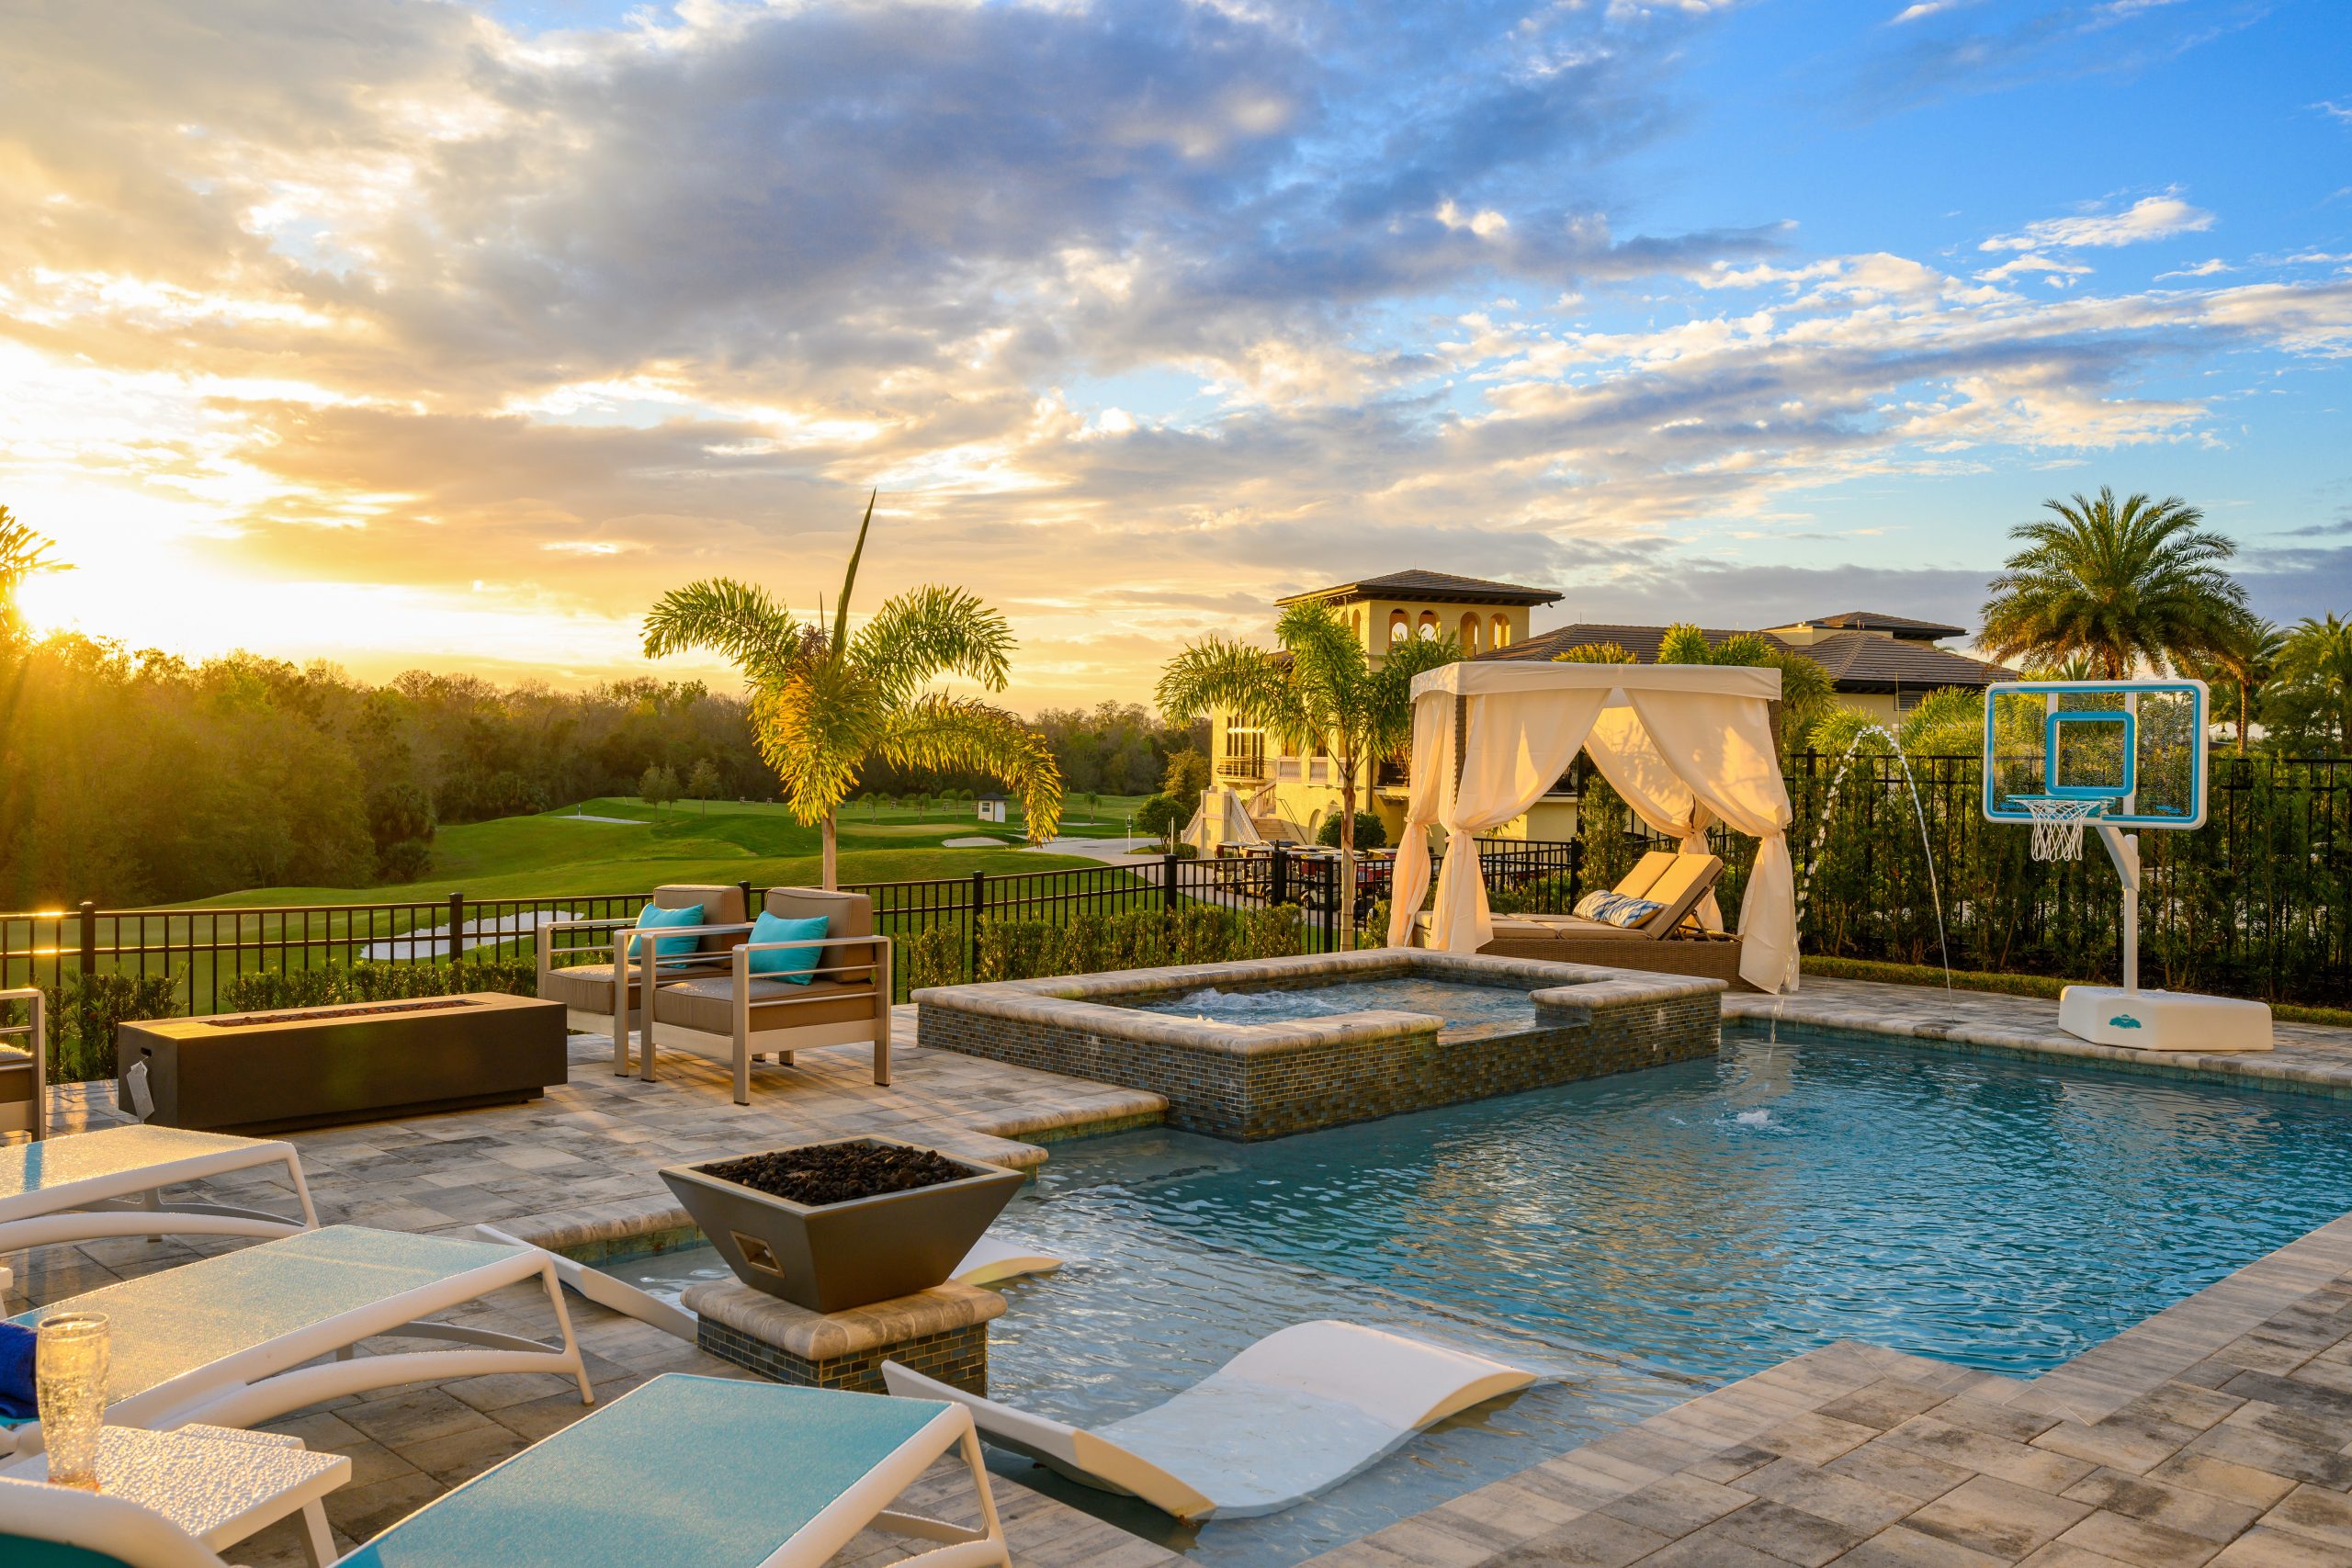 Home - Orlando Vacation Resorts - Jeeves Florida Rentals